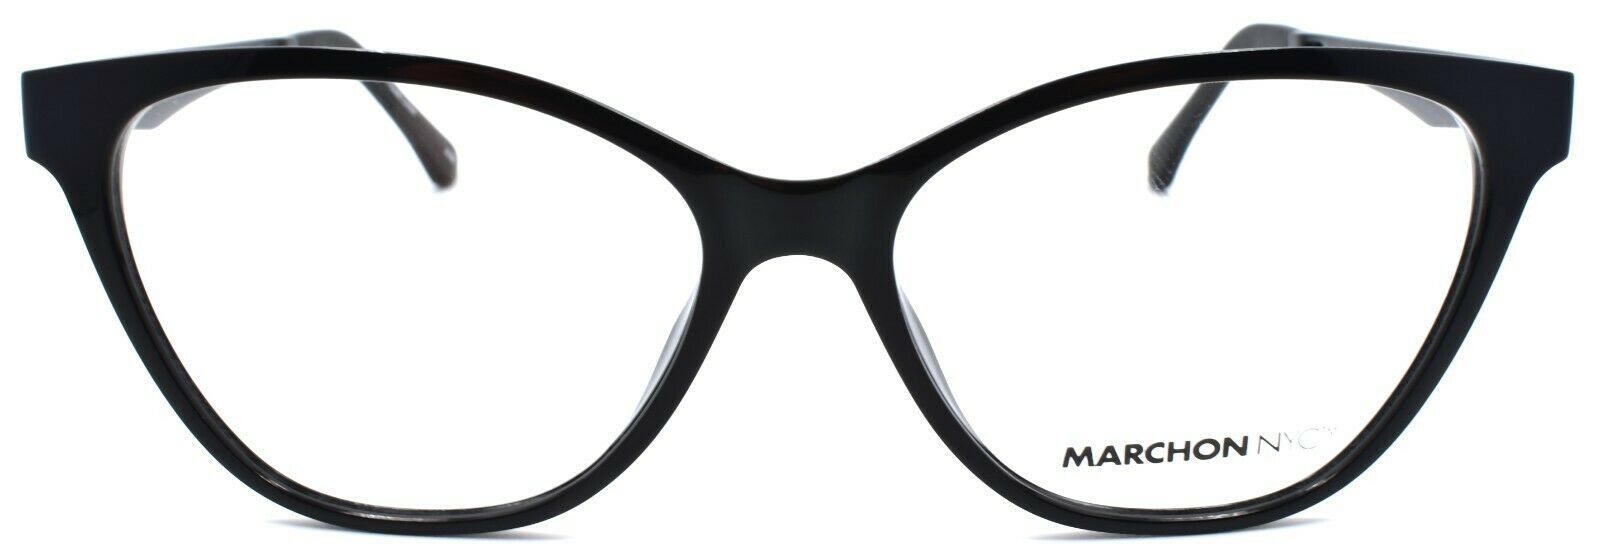 4-Marchon M-1500 001 Women's Eyeglasses 54-15-140 Black + 2 Magnetic Clip Ons-886895485838-IKSpecs